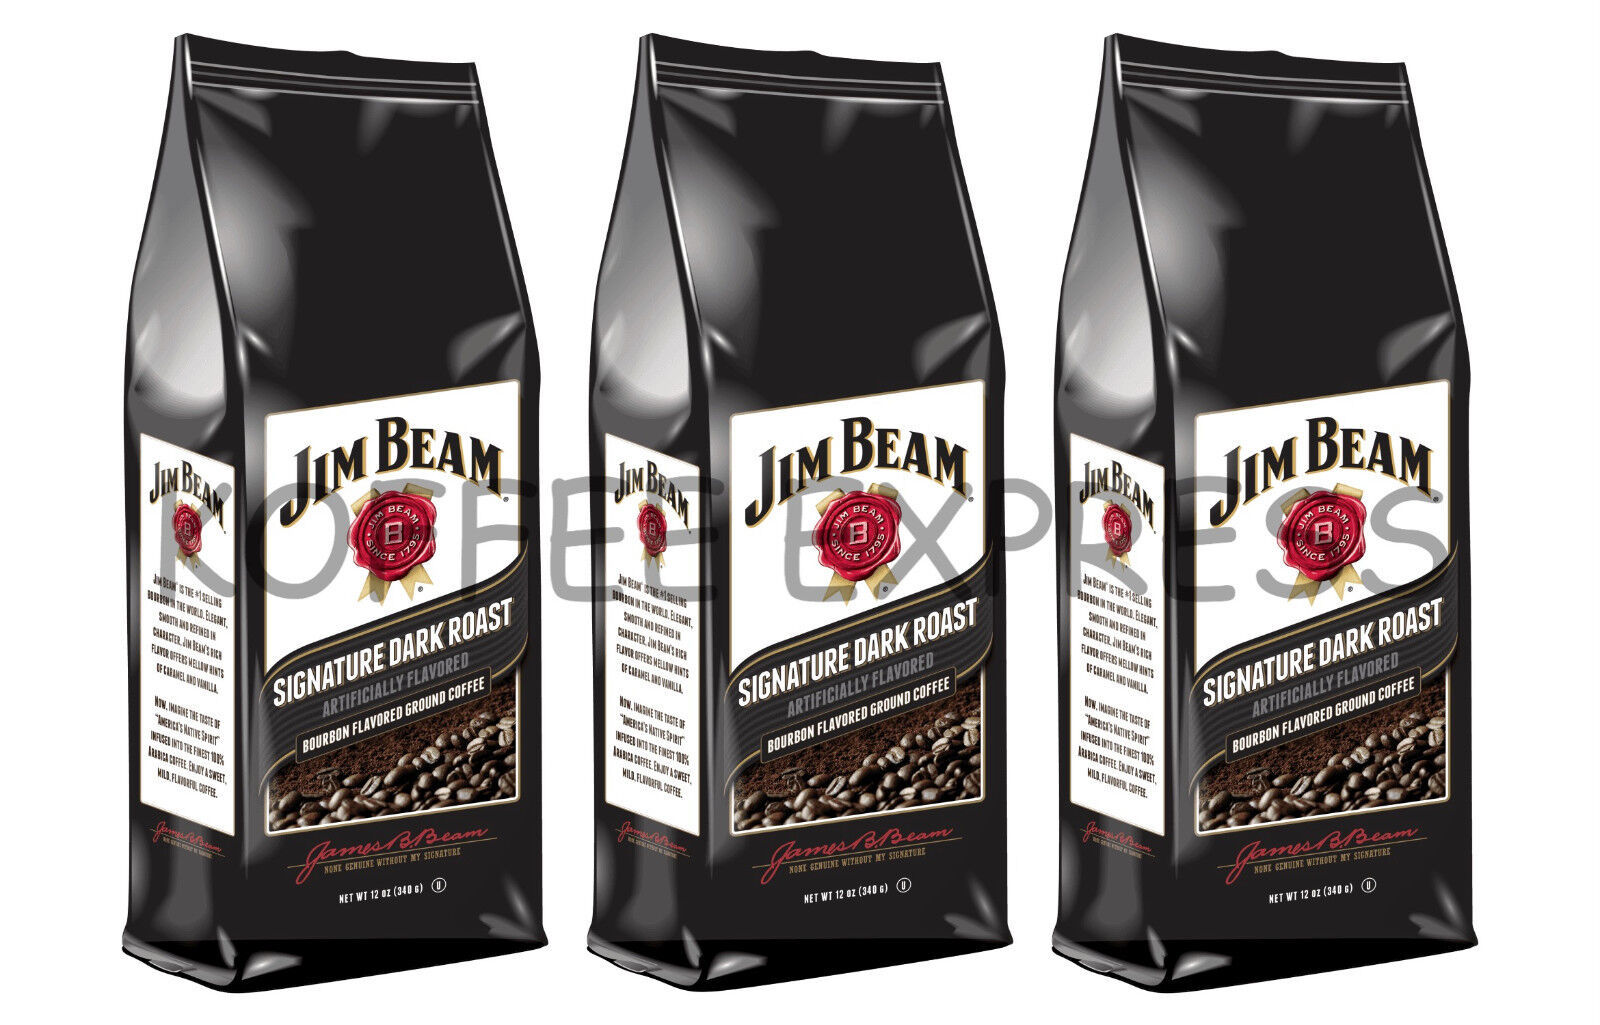 Primary image for Jim Beam Signature Dark Roast Bourbon Flavored Ground Coffee, 3 bags/12 oz each